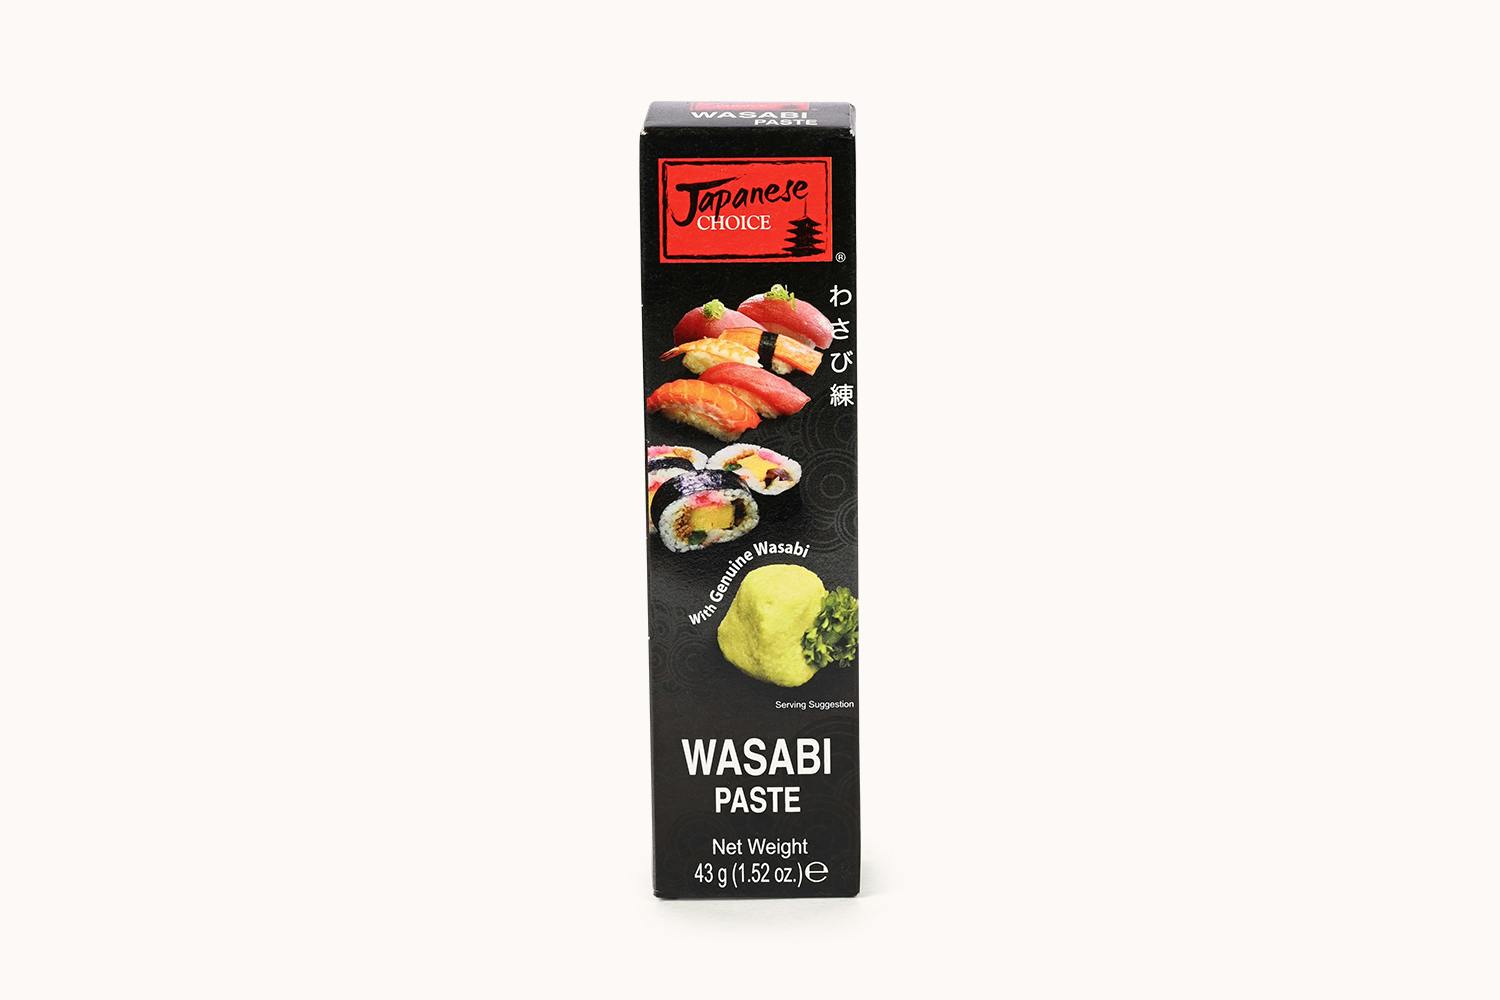 Japanese Choice Wasabi Paste